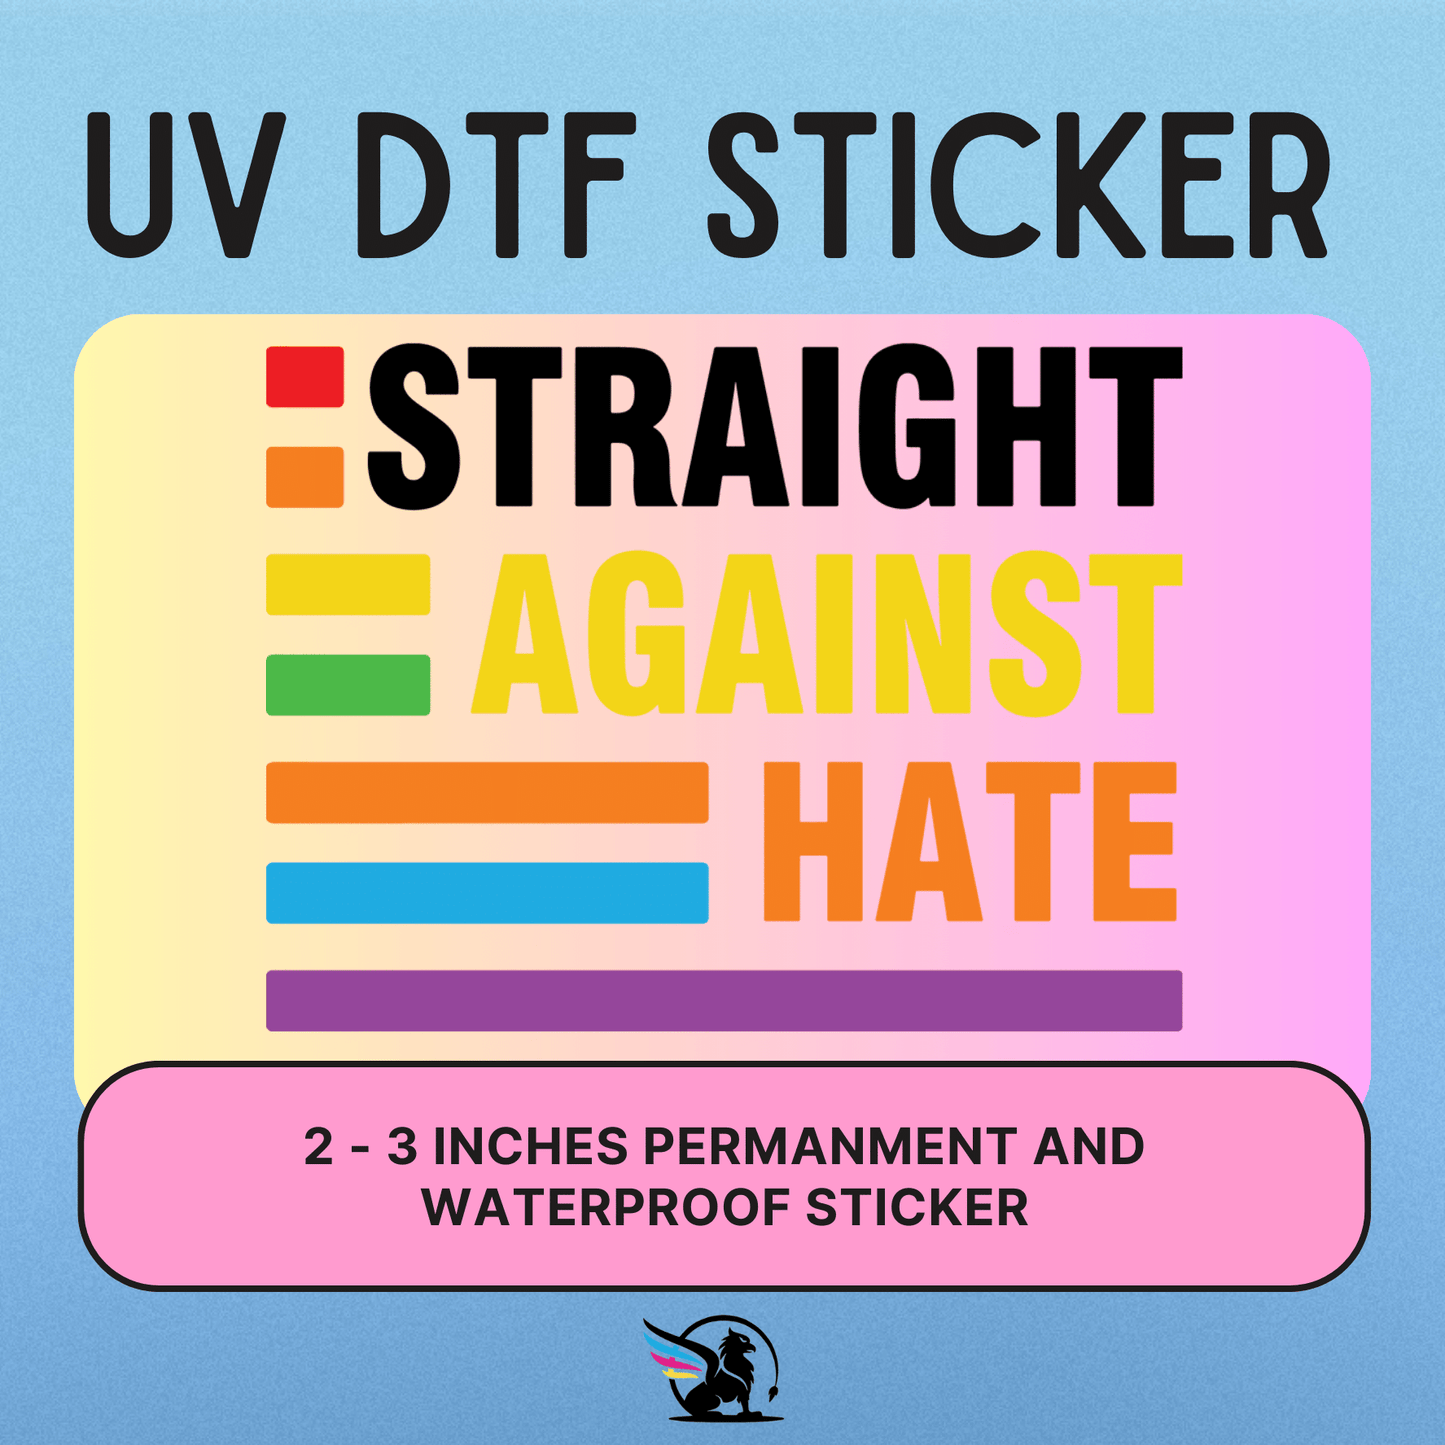 Straight Against Hate | UV DTF STICKER